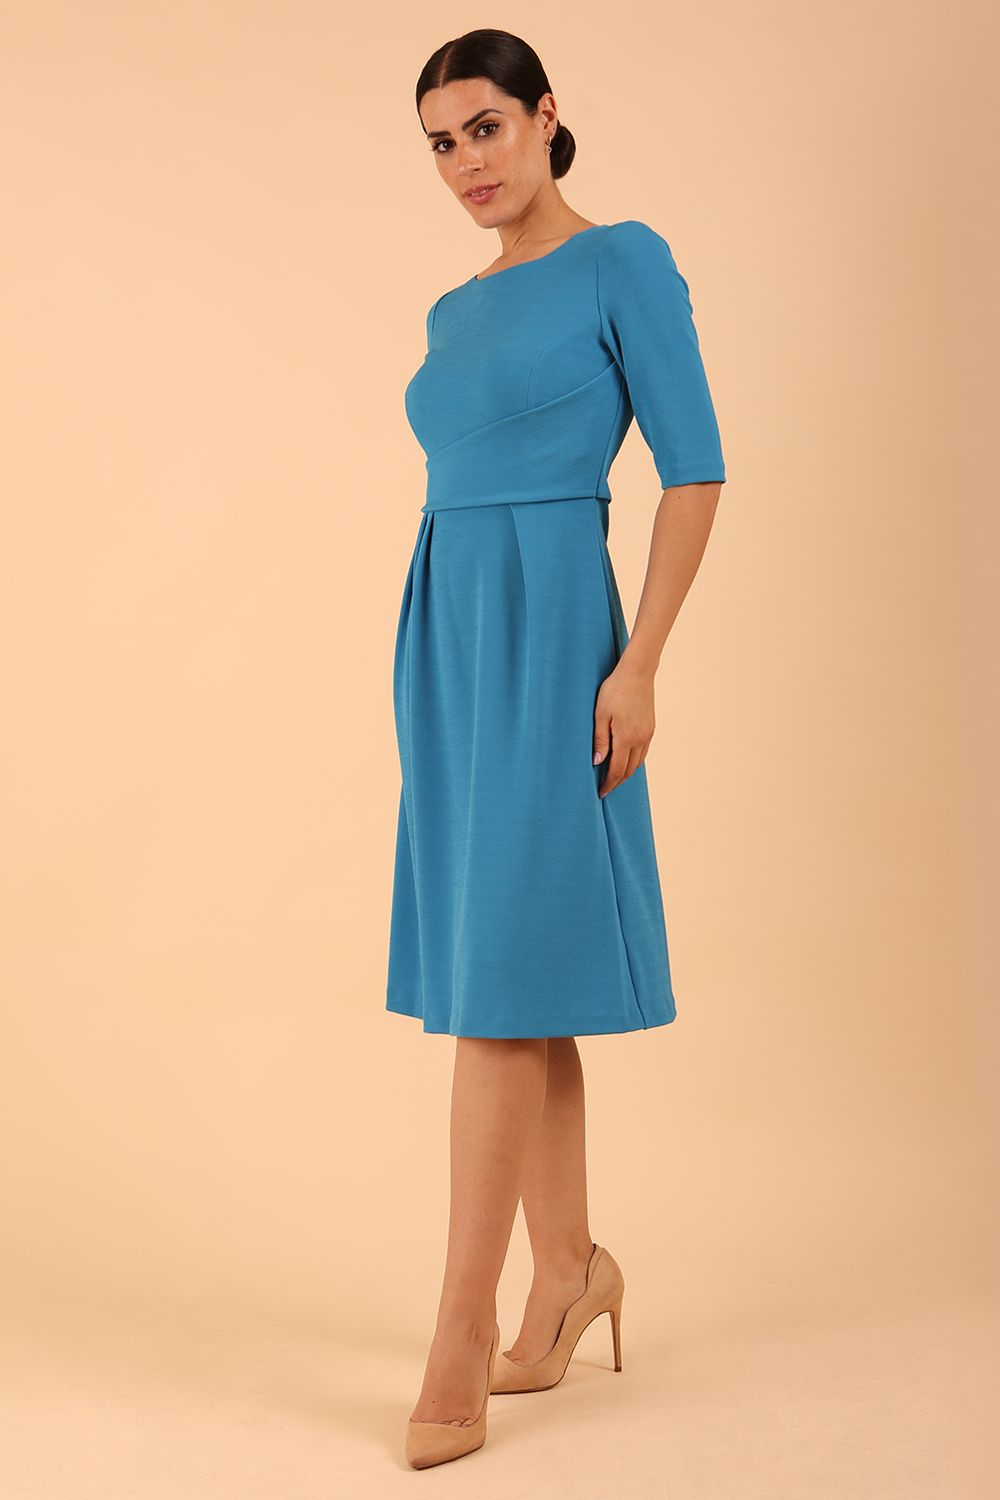 model wearing a Tarifa Elbow Sleeve Swing Dress 3/4 sleeves and knee length in malibu blue colour